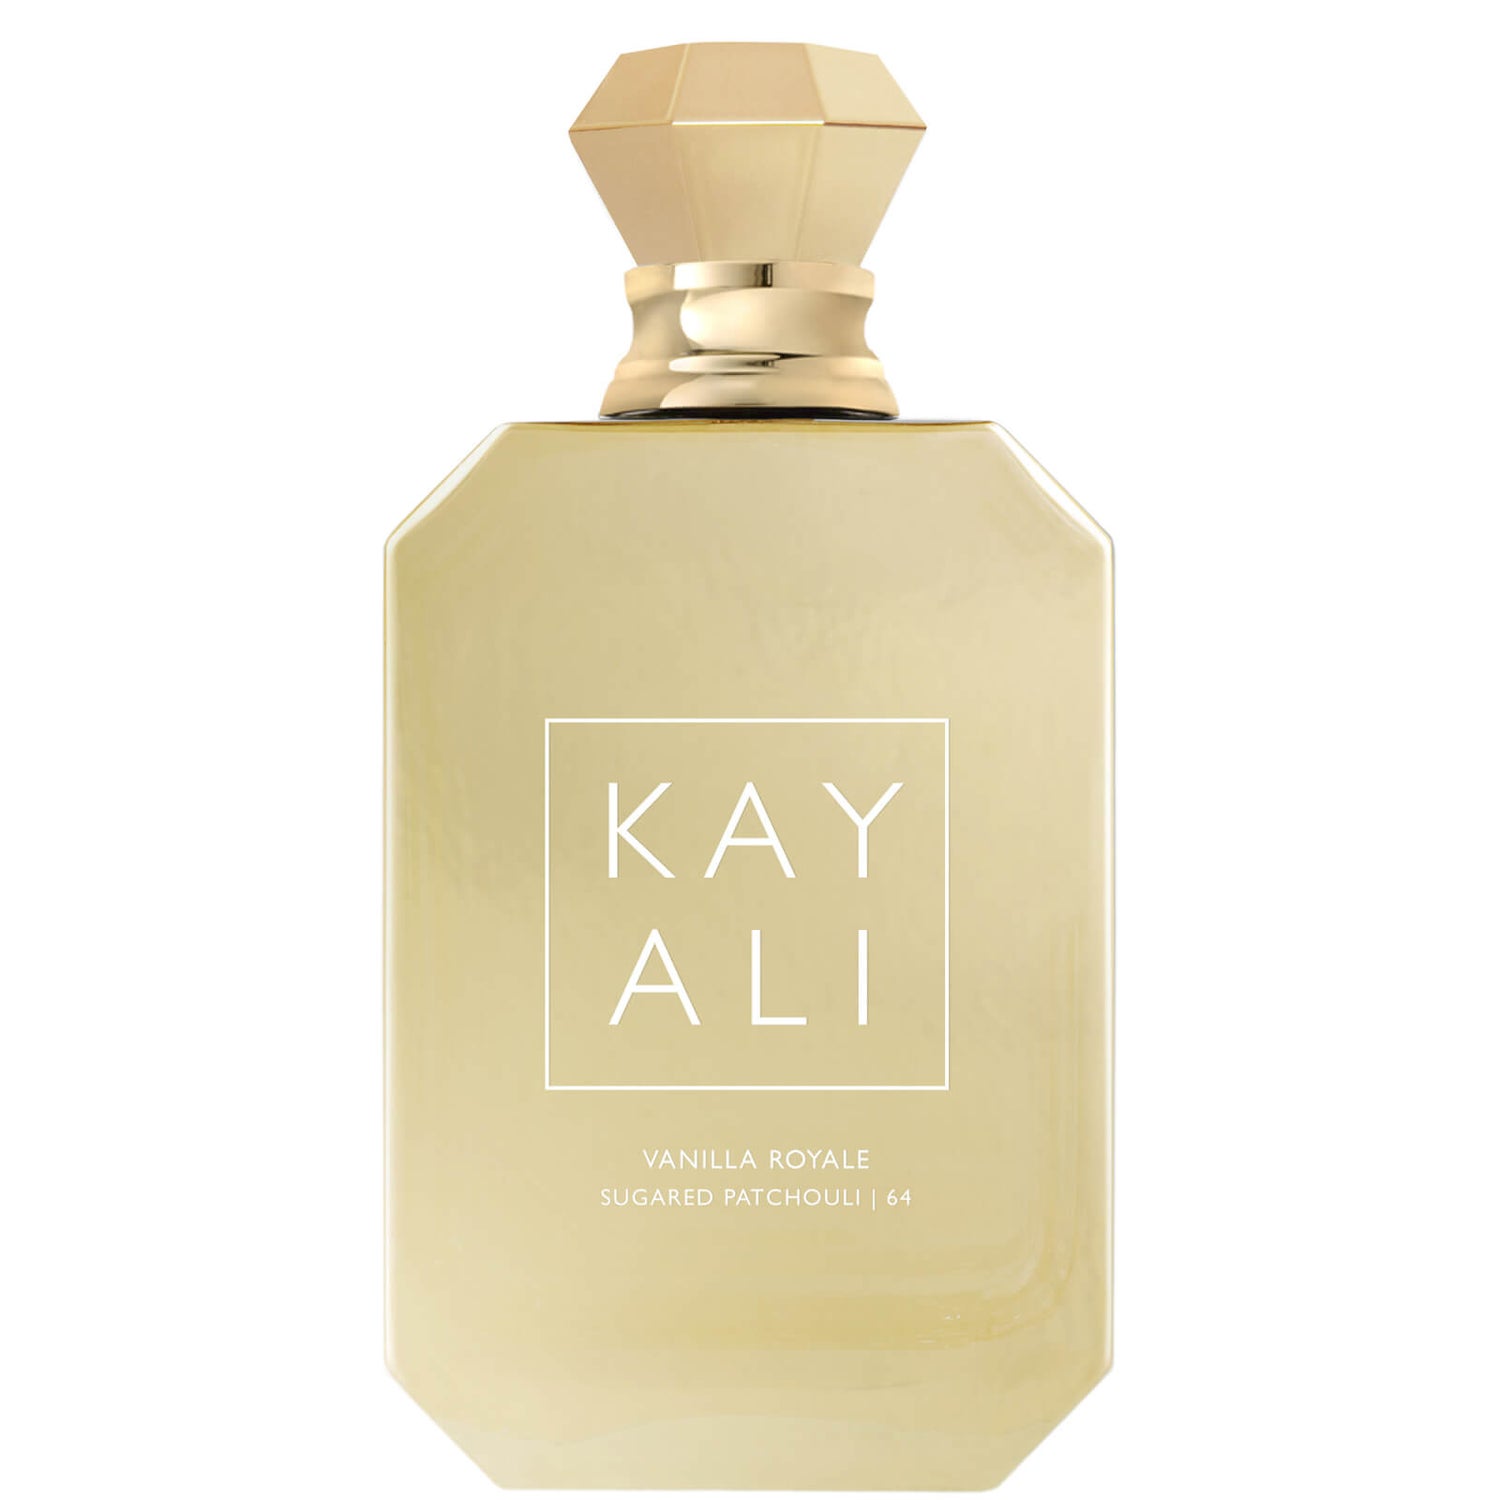 Huda Beauty Kayali Vanilla Royale Sugared Patchouli | 64 Eau de Parfum Intense - 100ml